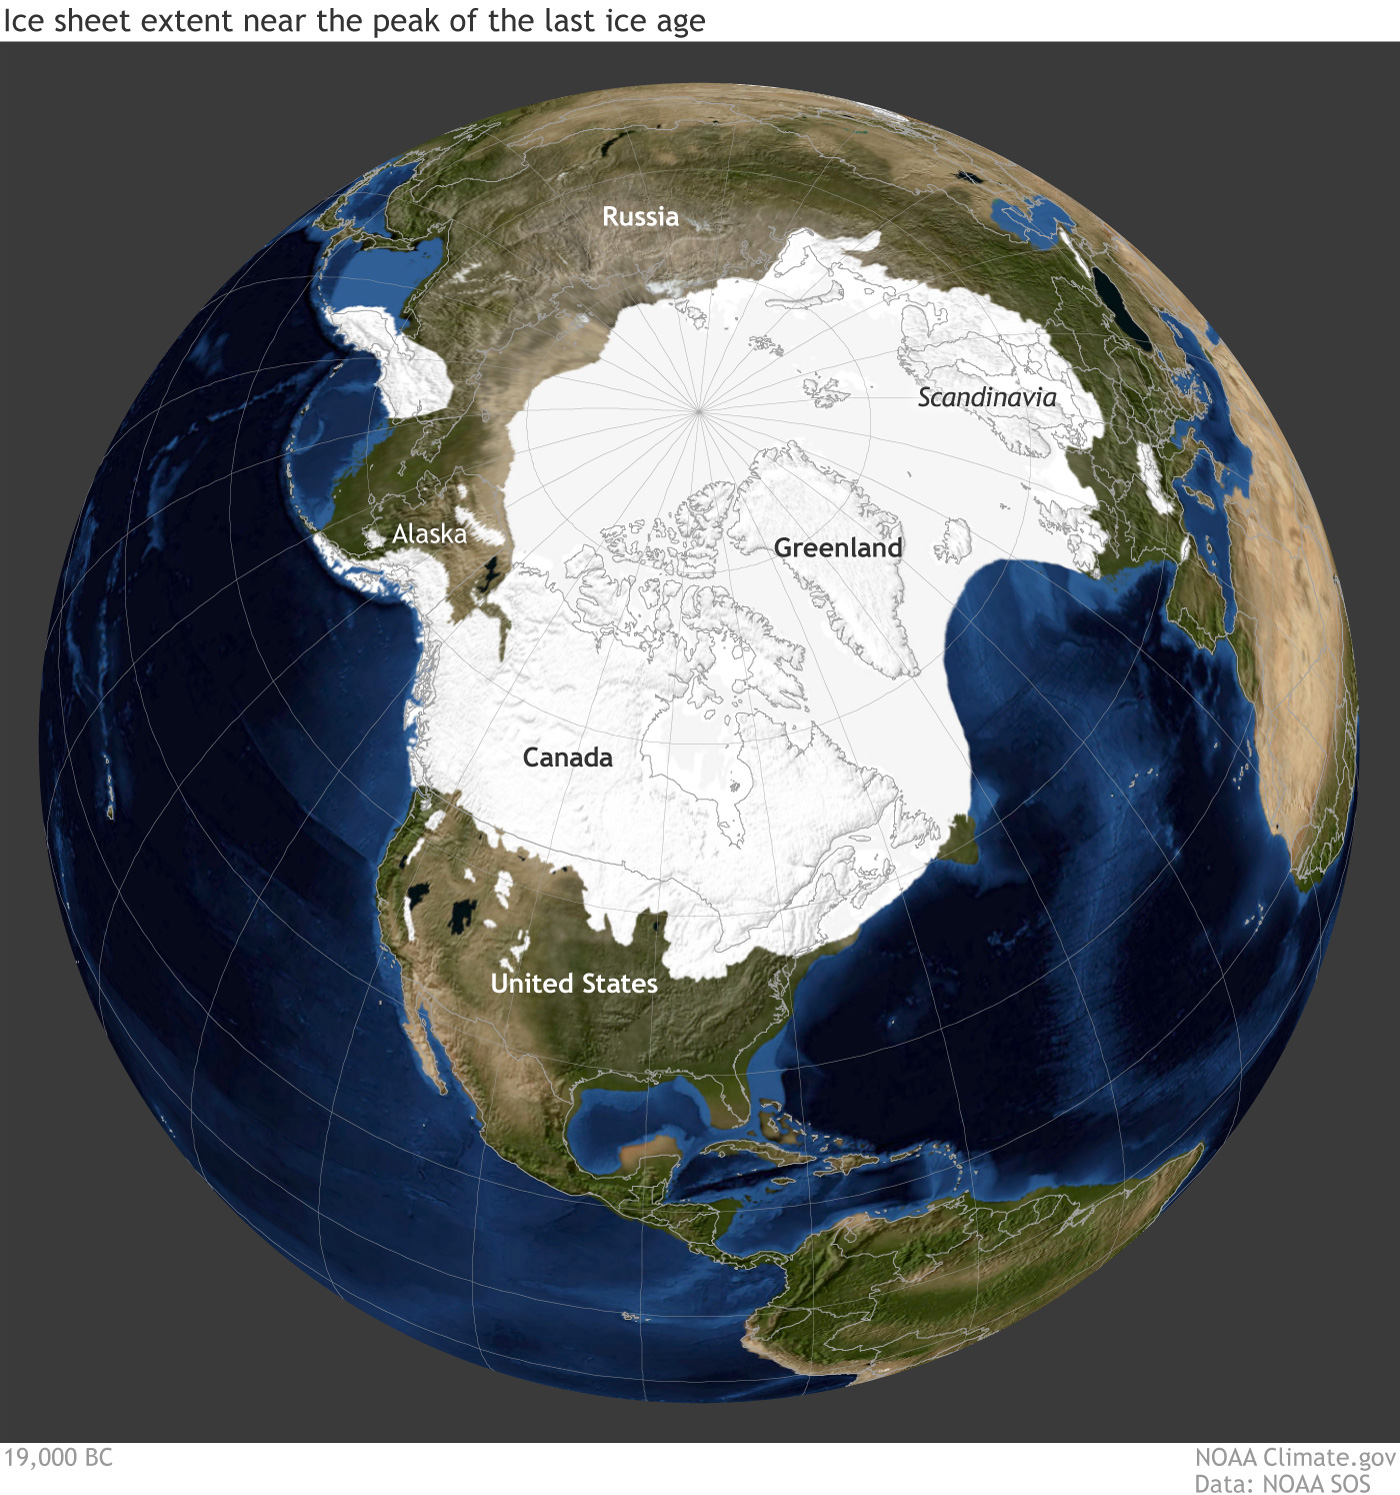 Blue marble globe with Northern Hemisphere ice sheet at peak of last ice age